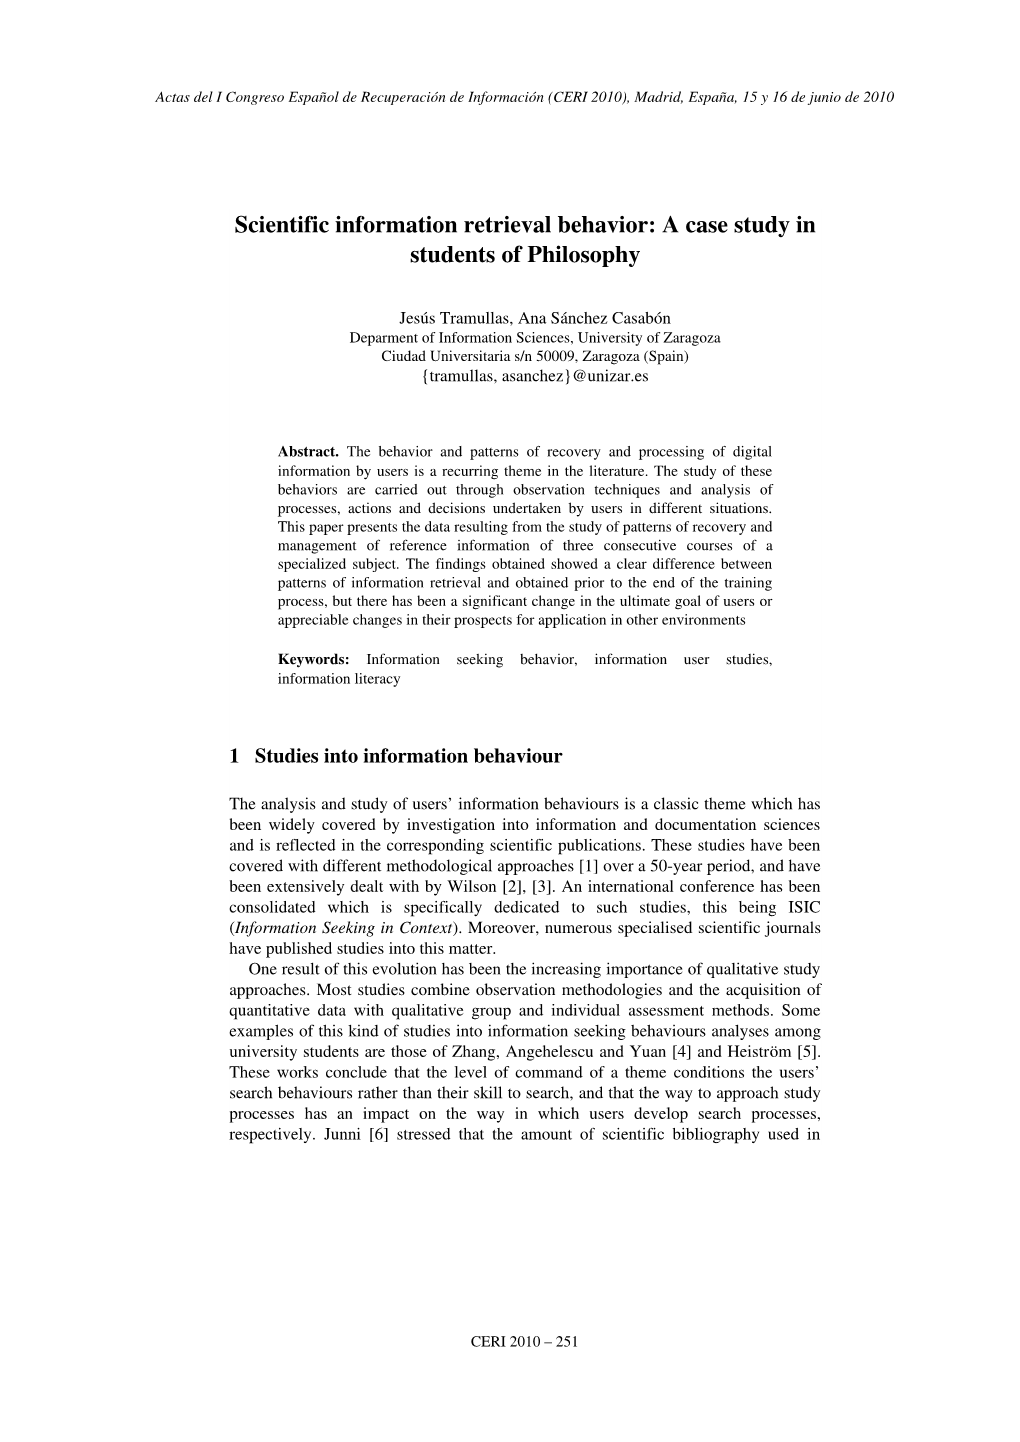 Scientific Information Retrieval Behavior: a Case Study in Students of Philosophy